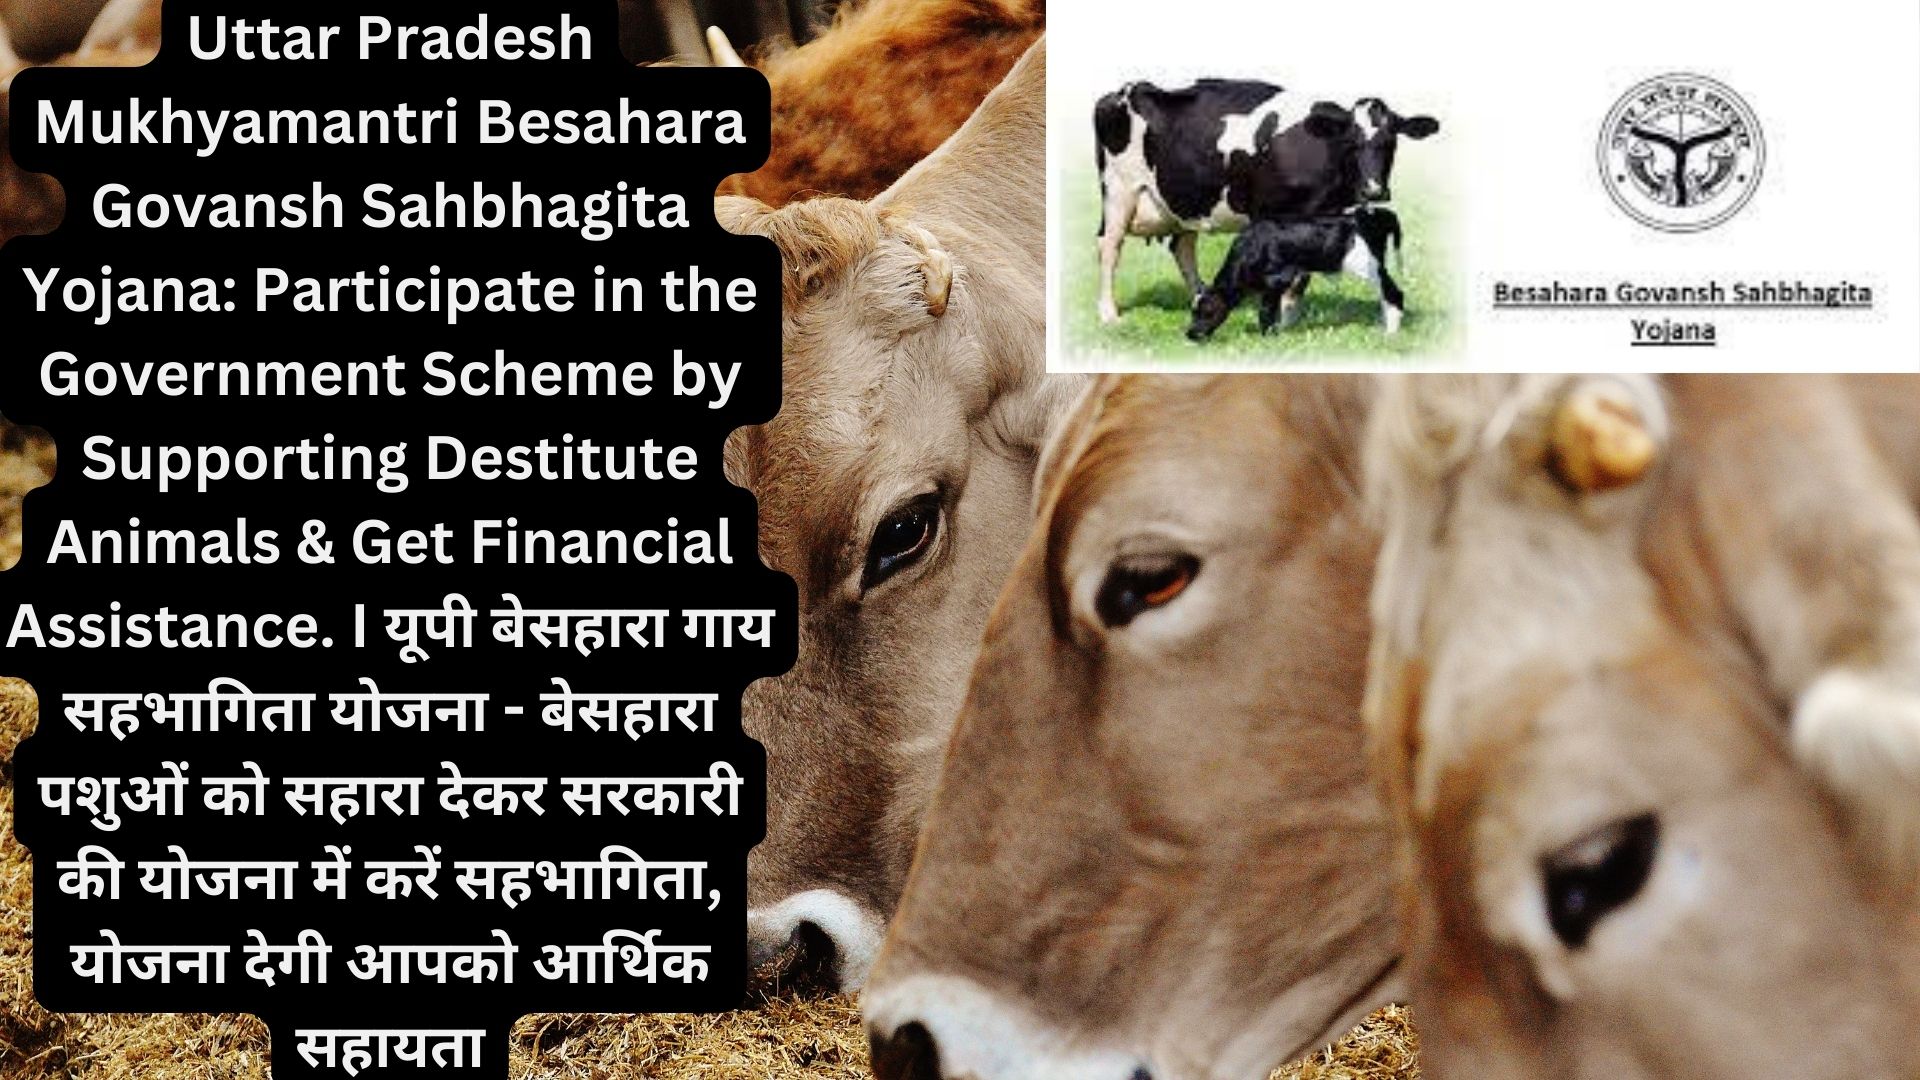 Uttar Pradesh Mukhyamantri Besahara Govansh Sahbhagita Yojana: Participate in the Government Scheme by Supporting Destitute Animals & Get Financial Assistance. I यूपी बेसहारा गाय सहभागिता योजना - बेसहारा पशुओं को सहारा देकर सरकारी की योजना में करें सहभागिता, योजना देगी आपको आर्थिक सहायता